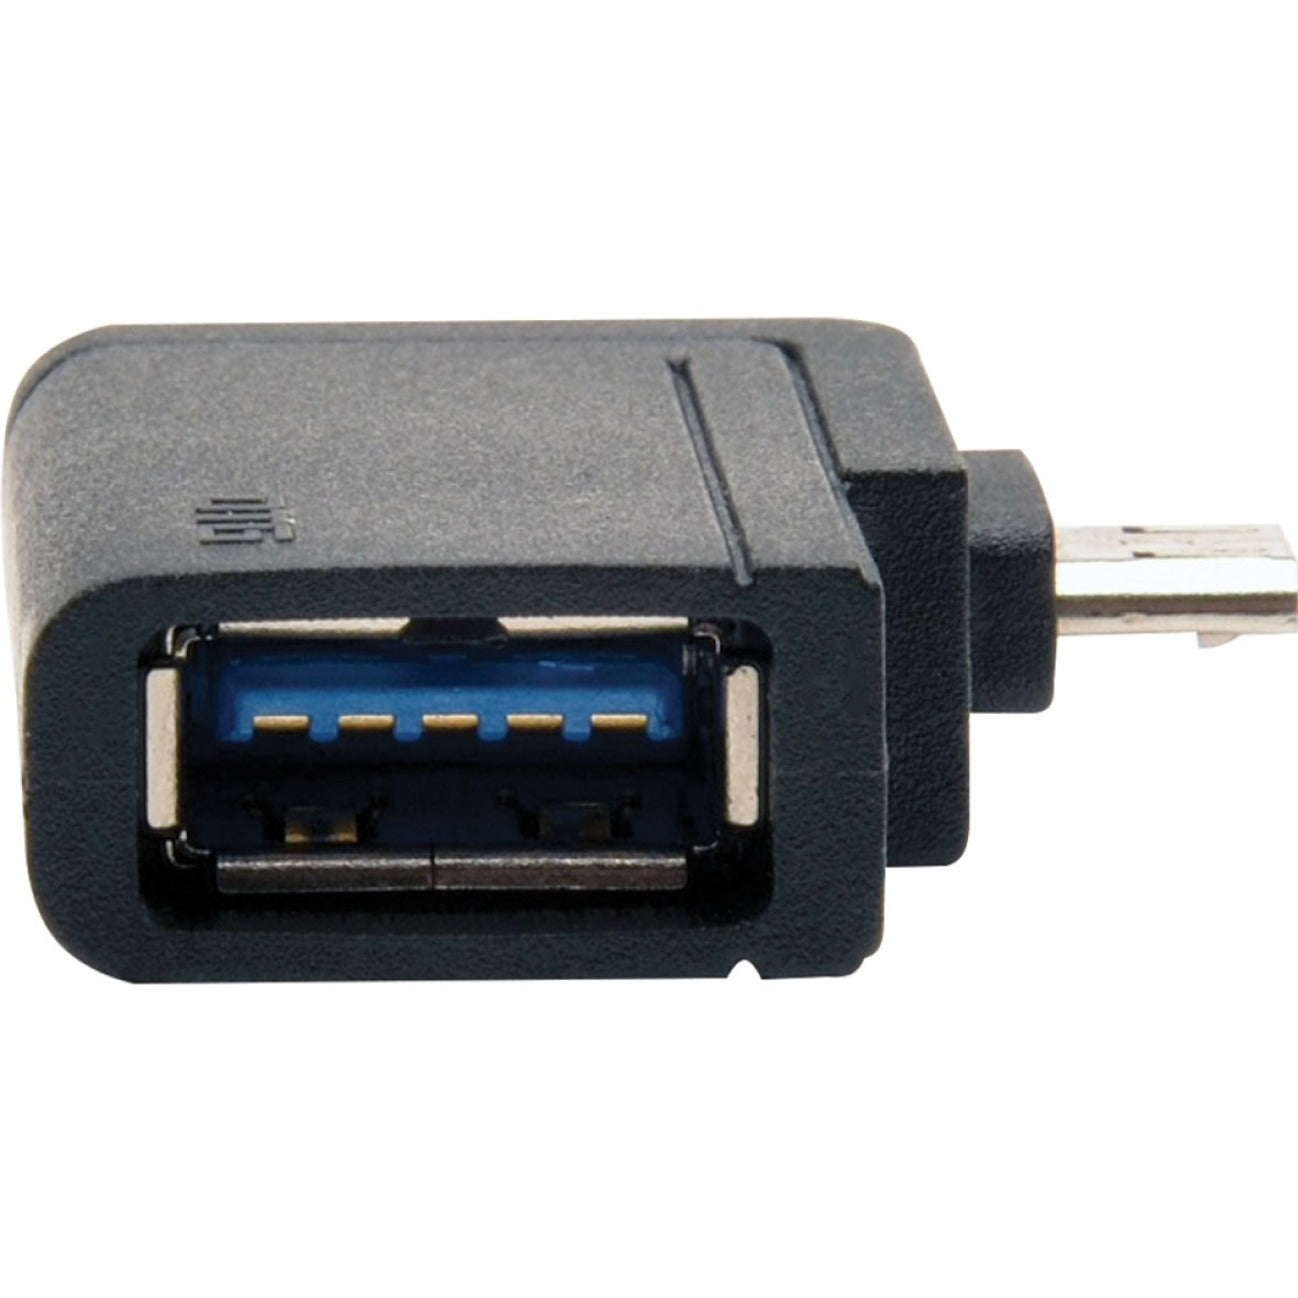 Tripp Lite U053-000-OTG 2-in-1 OTG Adapter USB 3.0 + 2.0, Data Transfer Adapter